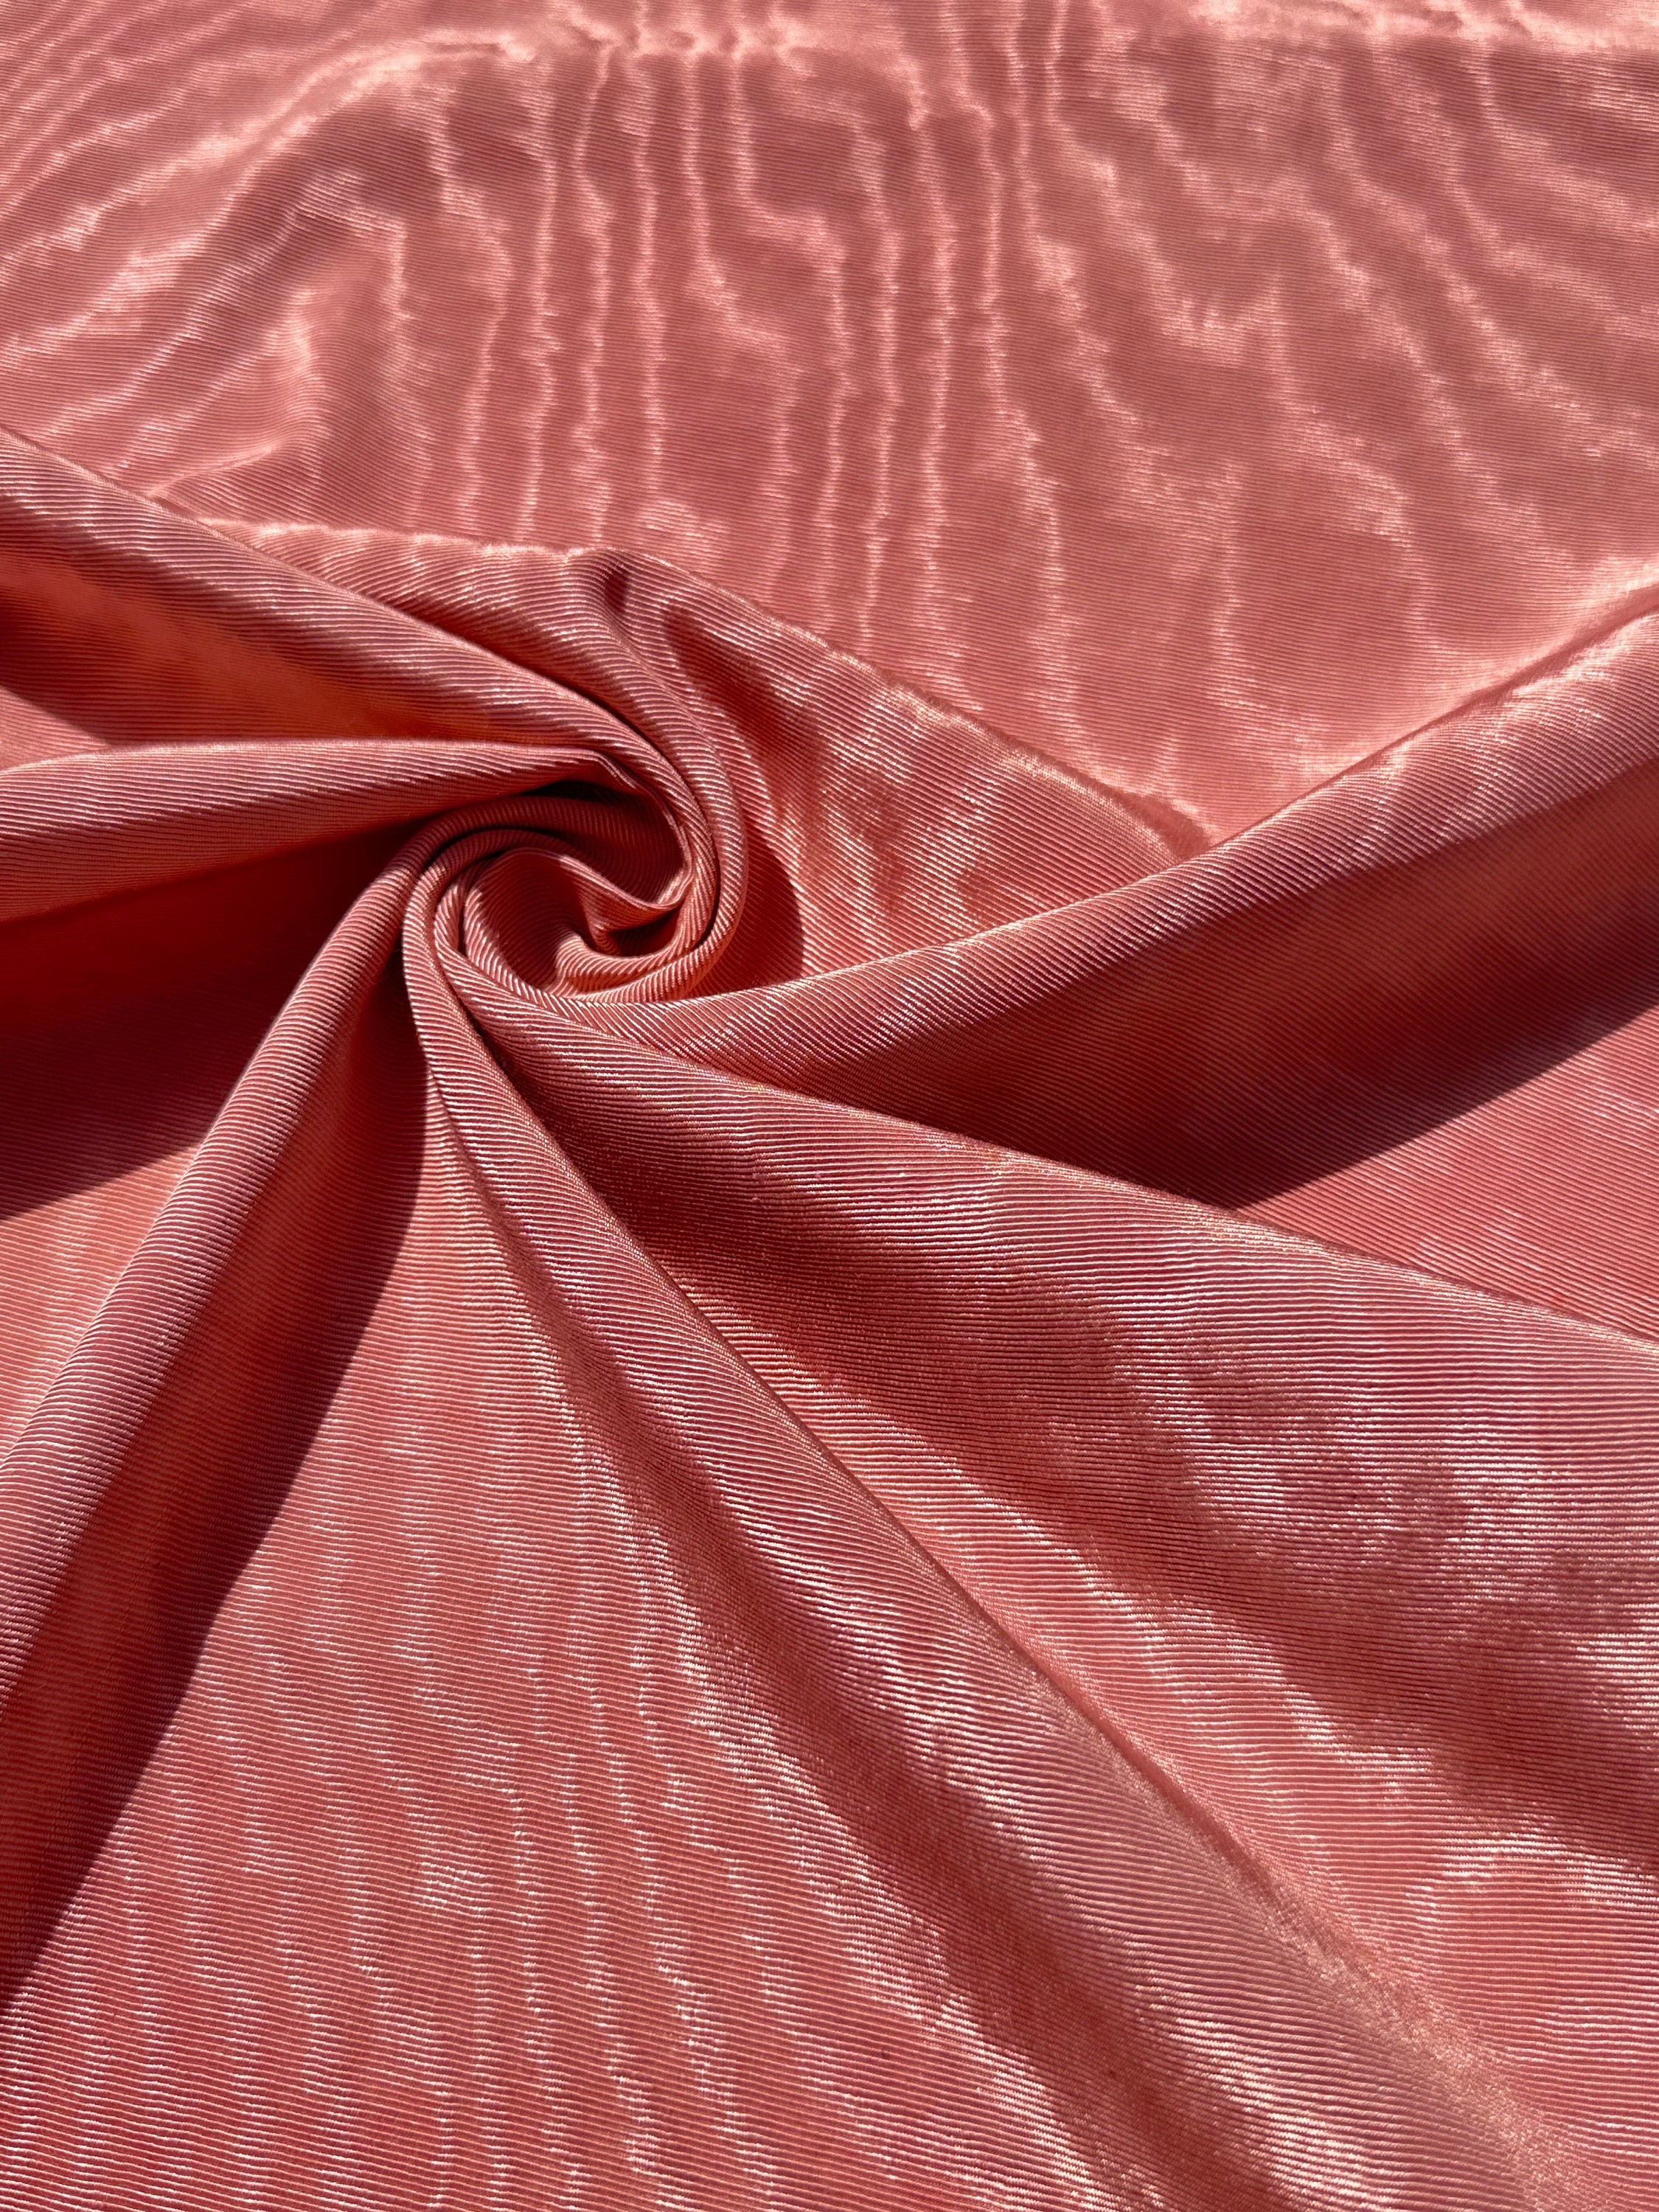 Farrisilk Decor Dusty Rose Iridescent Color Accent Ribbon RA717-22